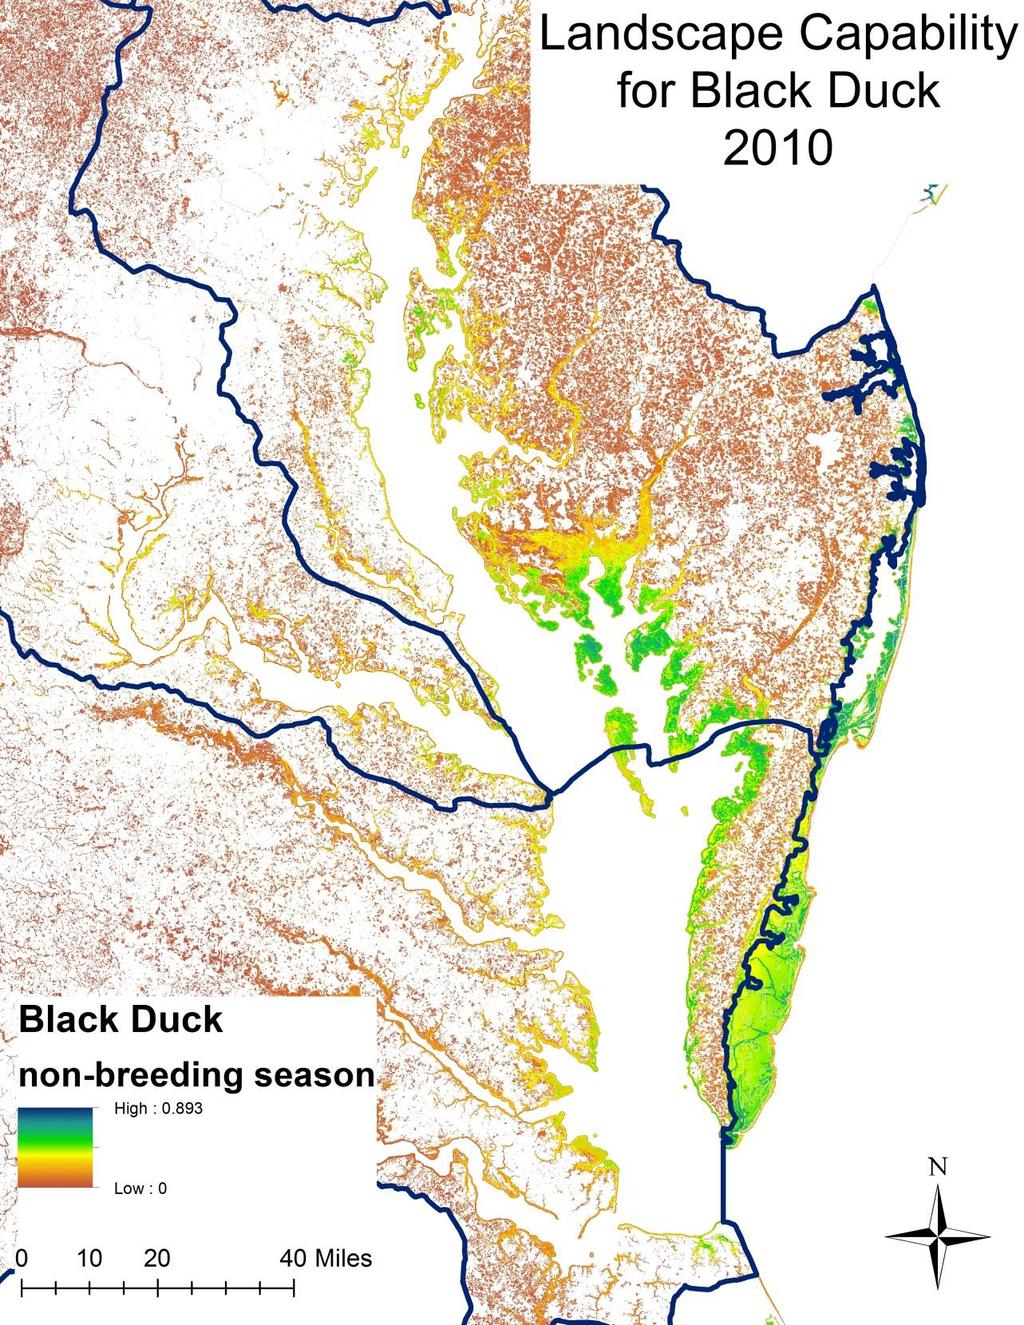 Black duck wintering habitat in Chesapeake Bay Review of model by